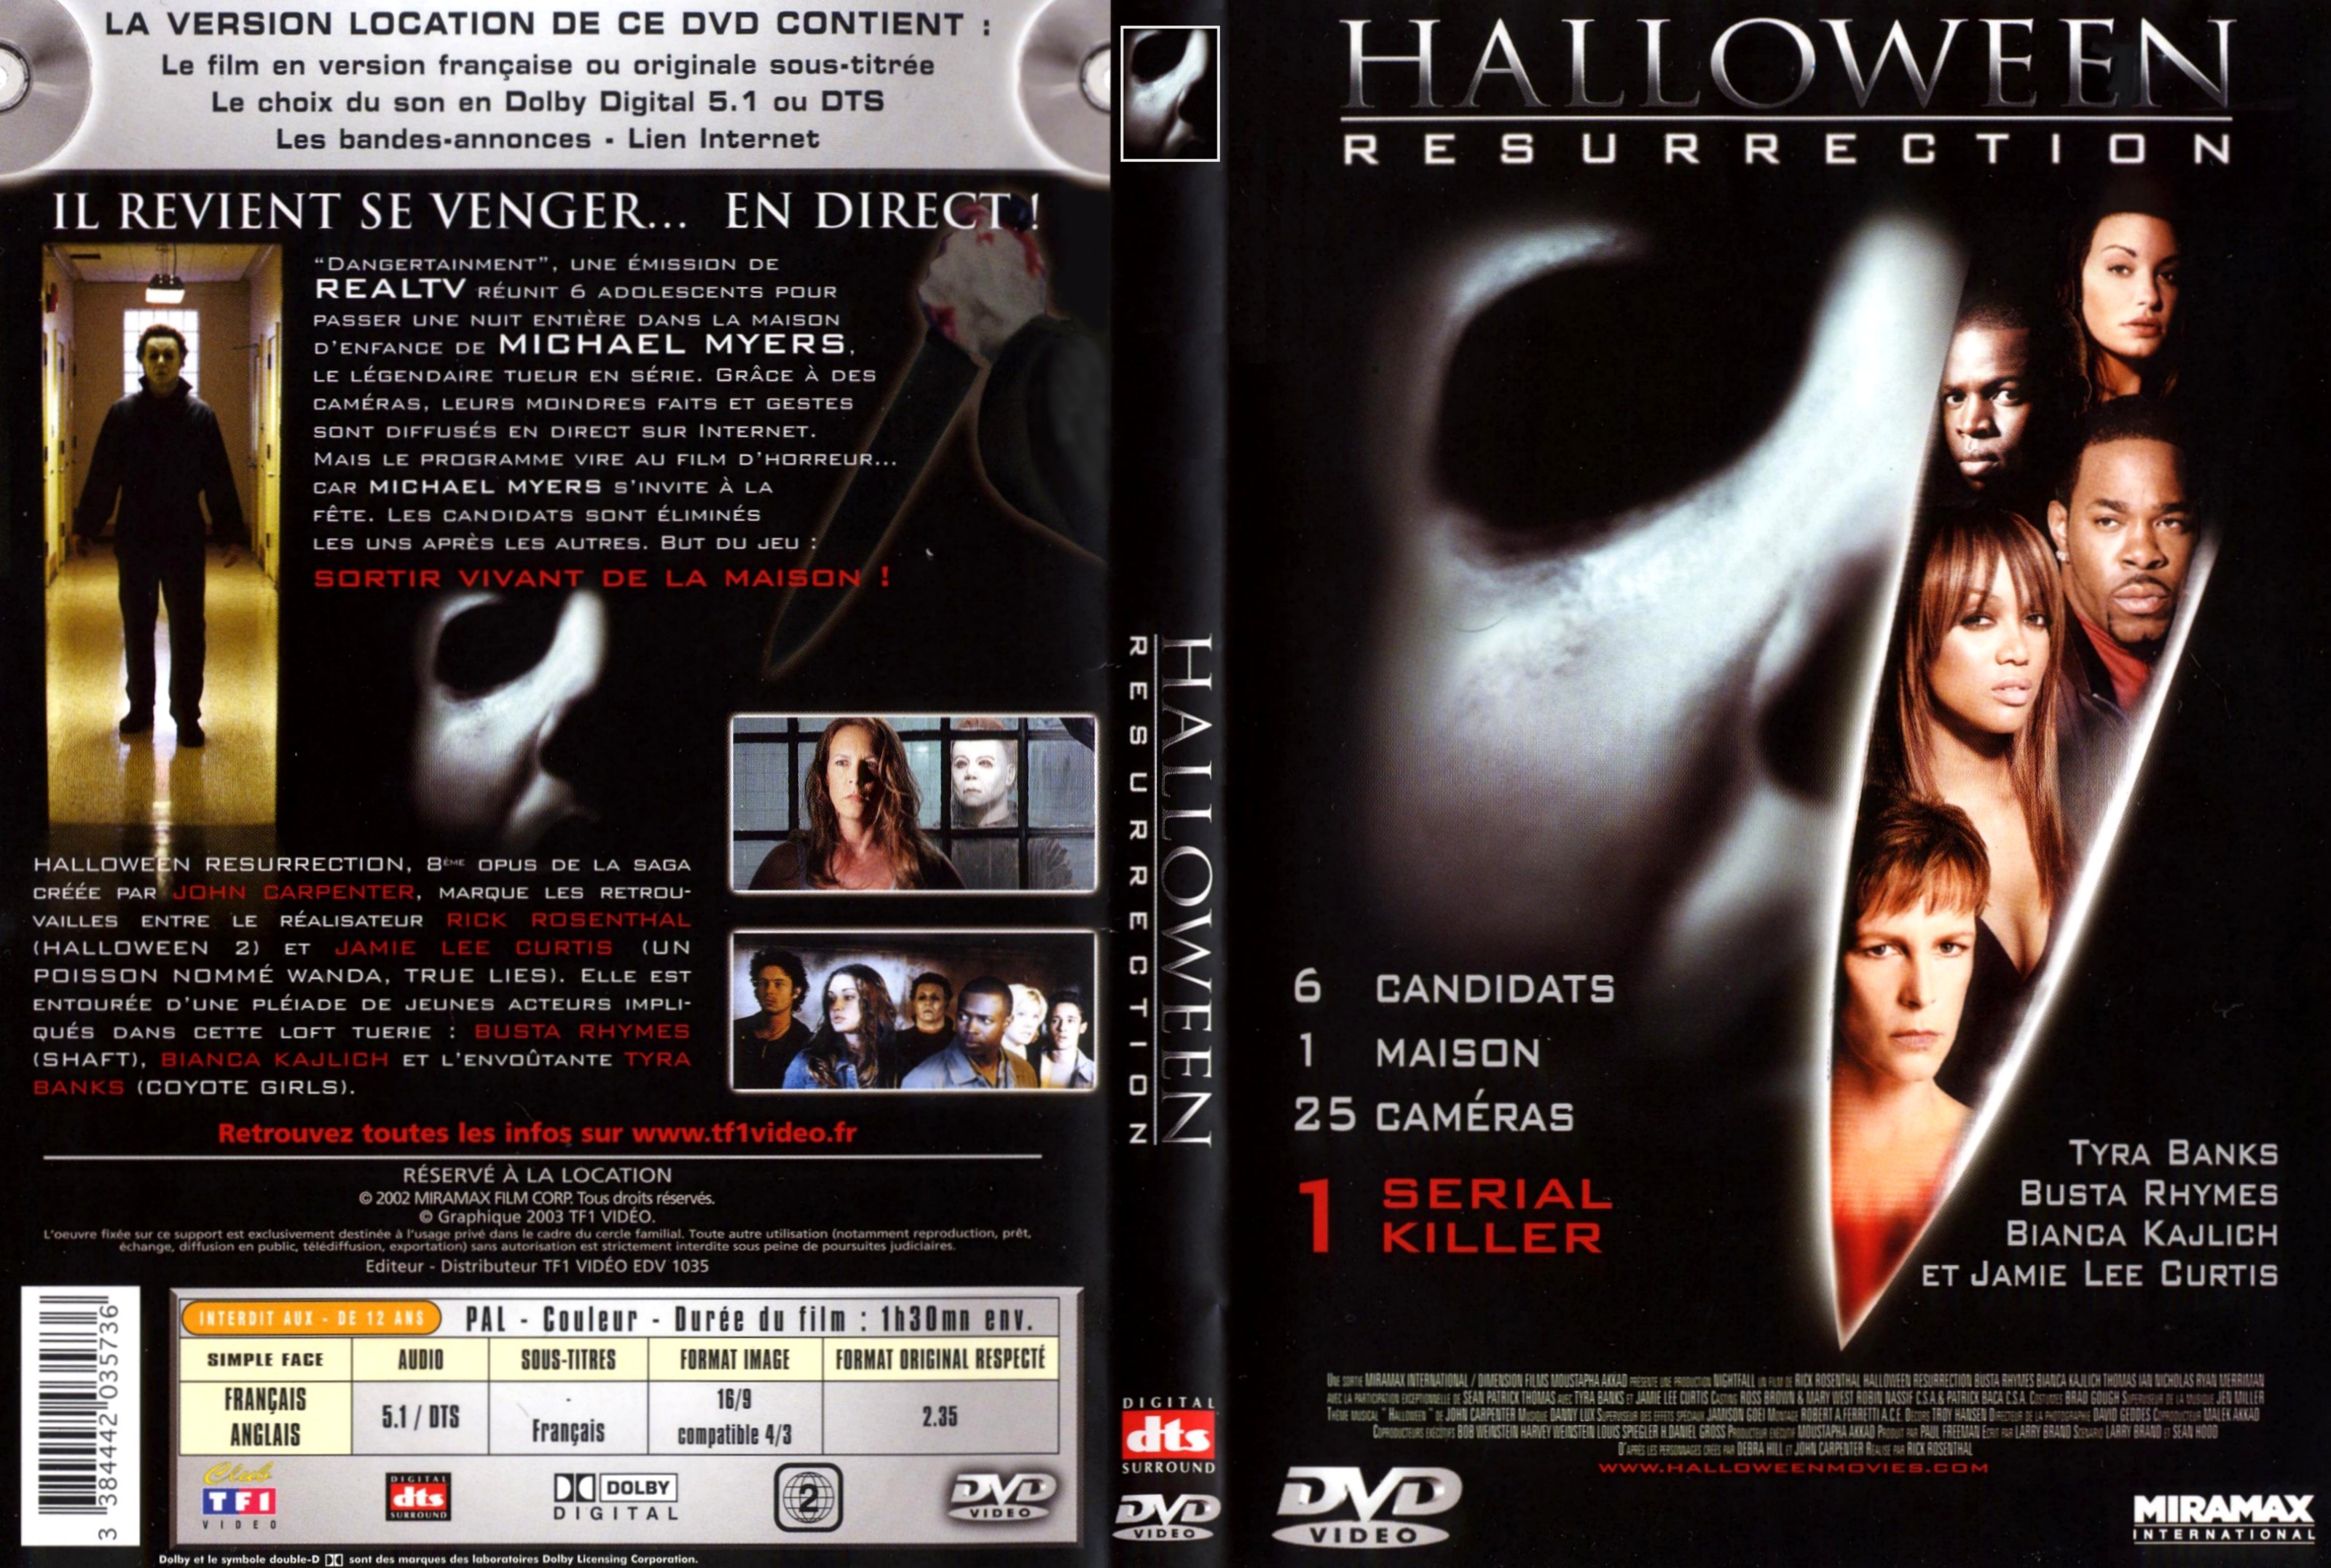 Jaquette DVD Halloween resurrection v2